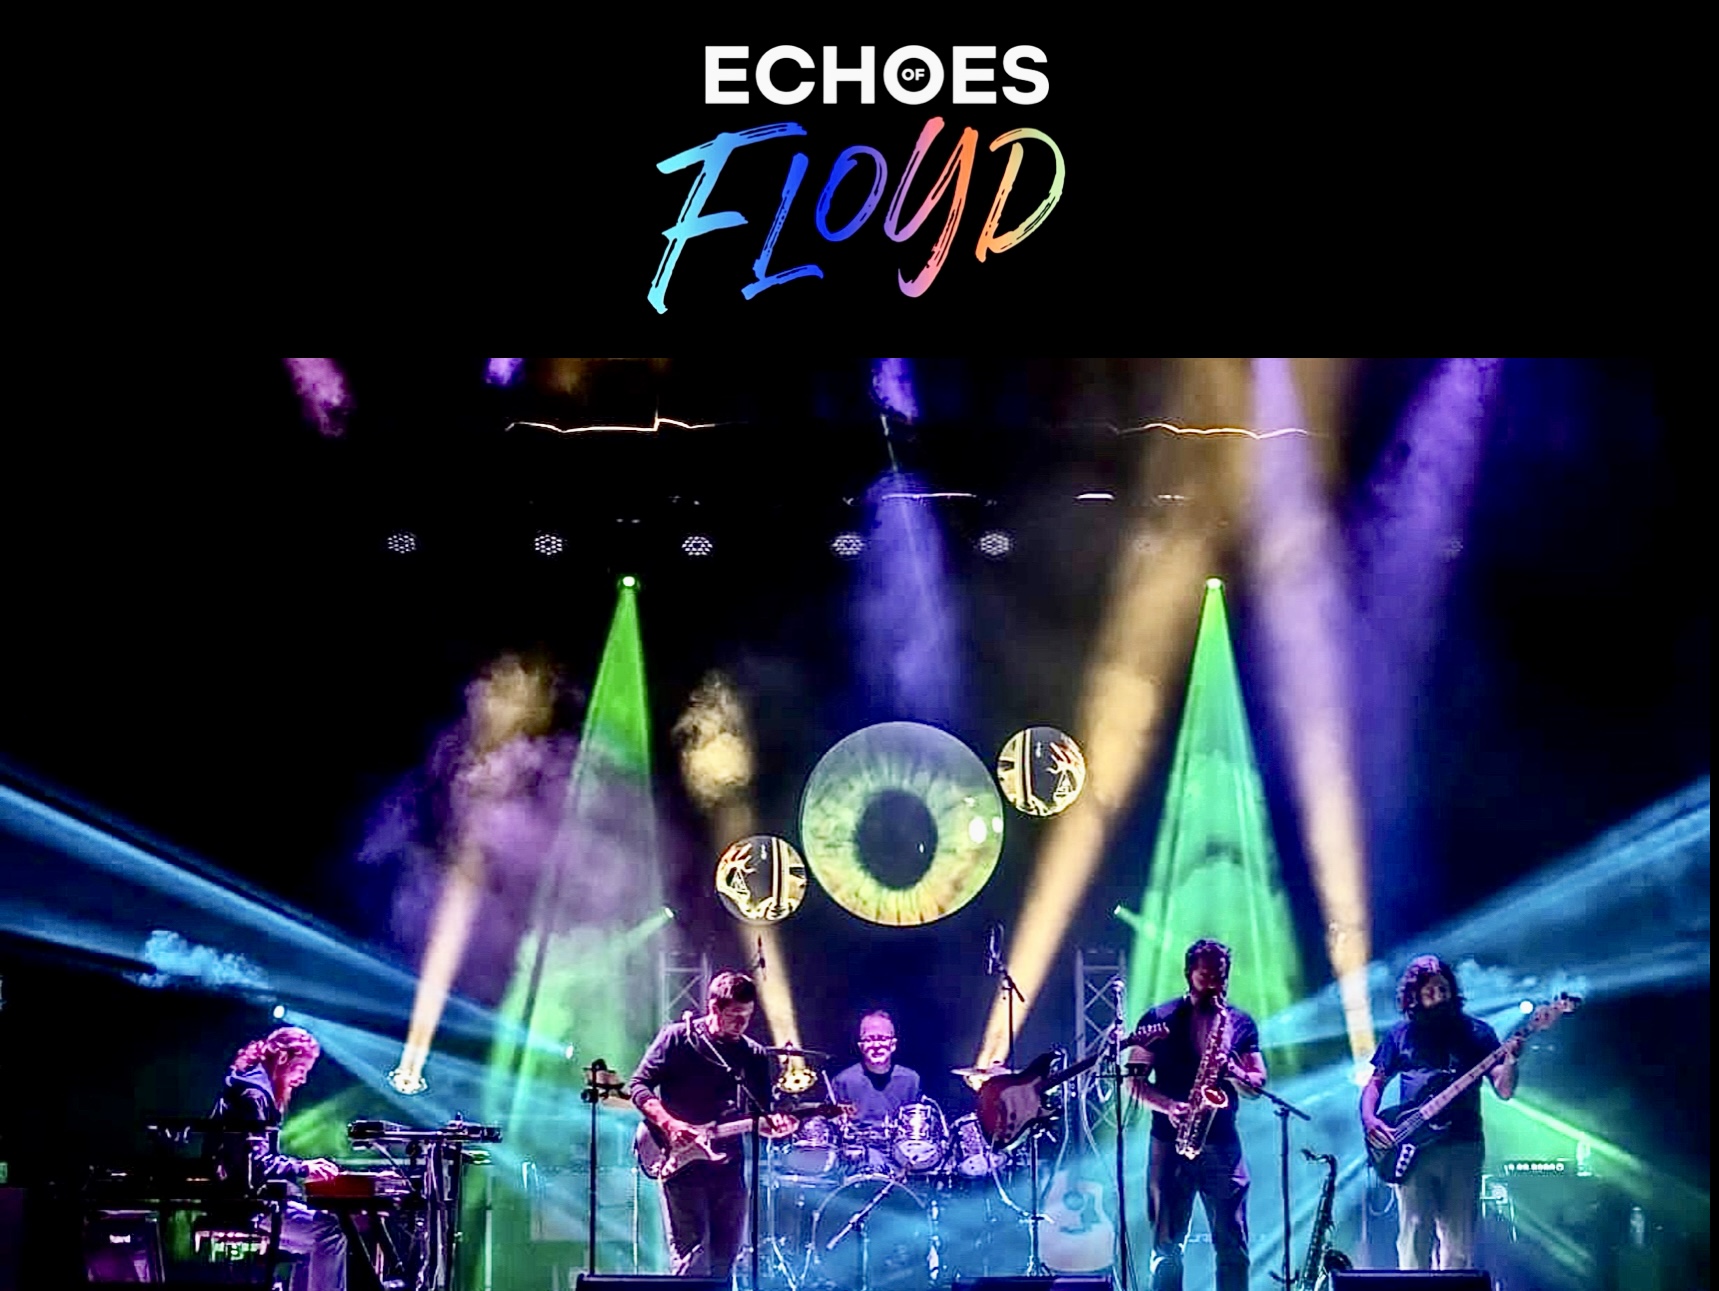 Echoes of Floyd